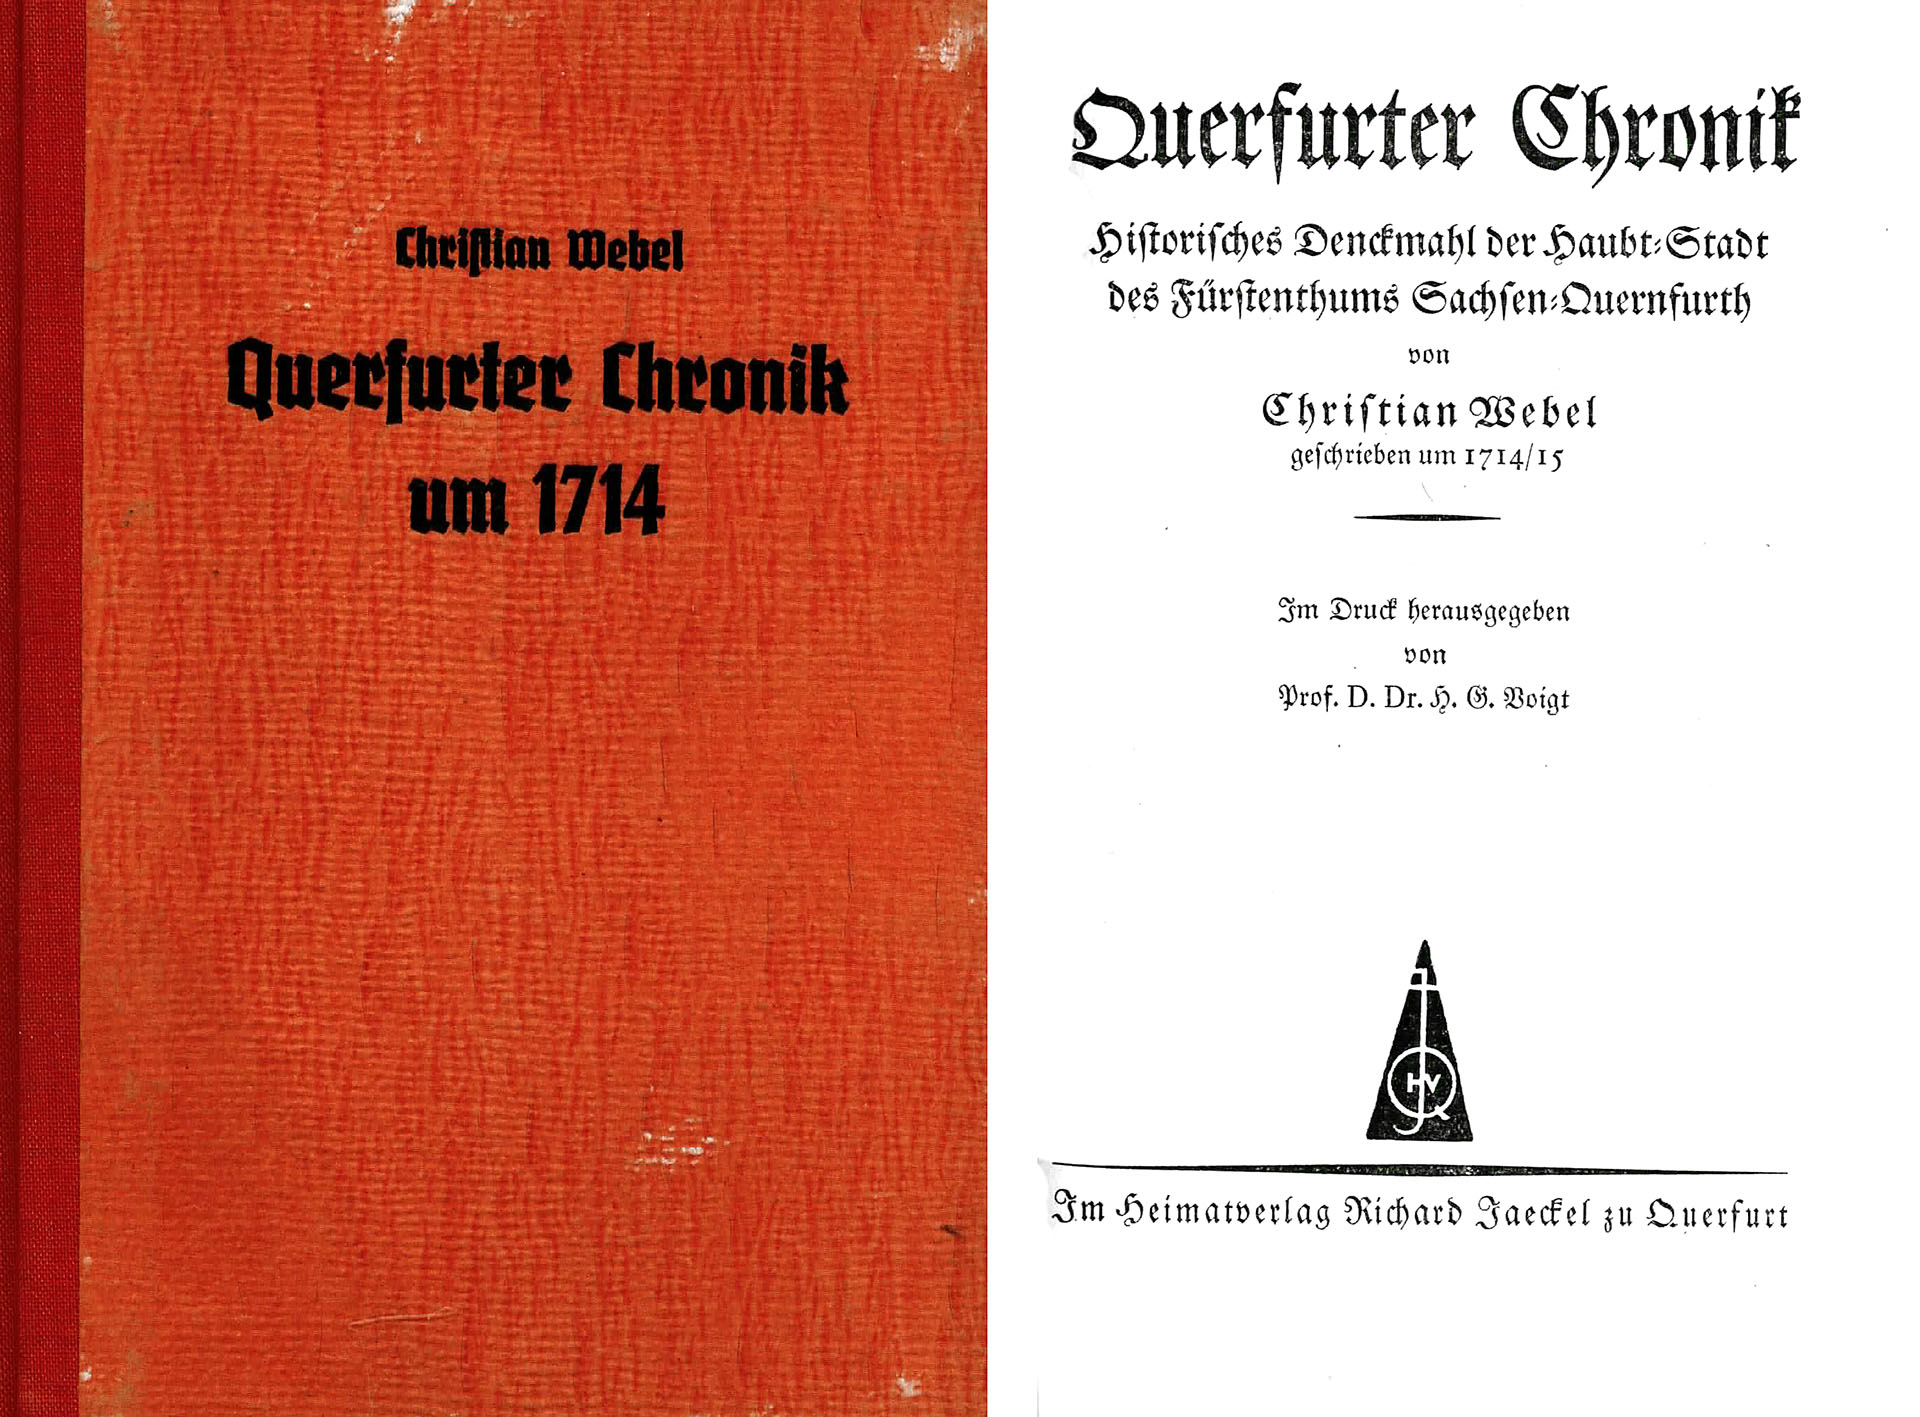 Querfurter Chronik - Webel, Christian /  Herausgeber: Prof. Voigt, H. G.